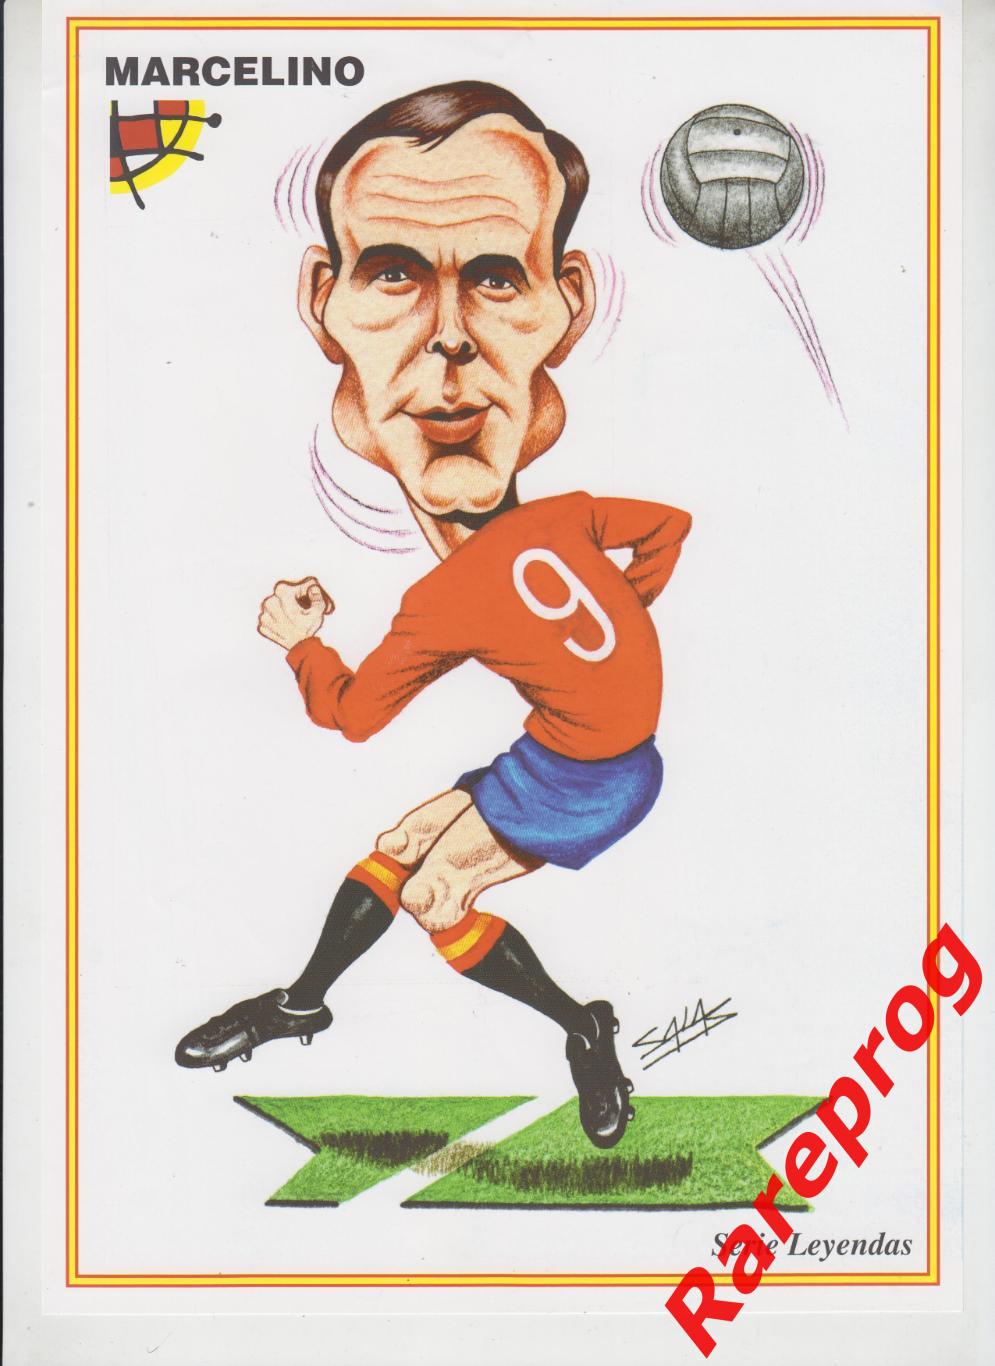 журнал Футбол RFEF Испания № 104 январь 2008 - постер Marcelino 1